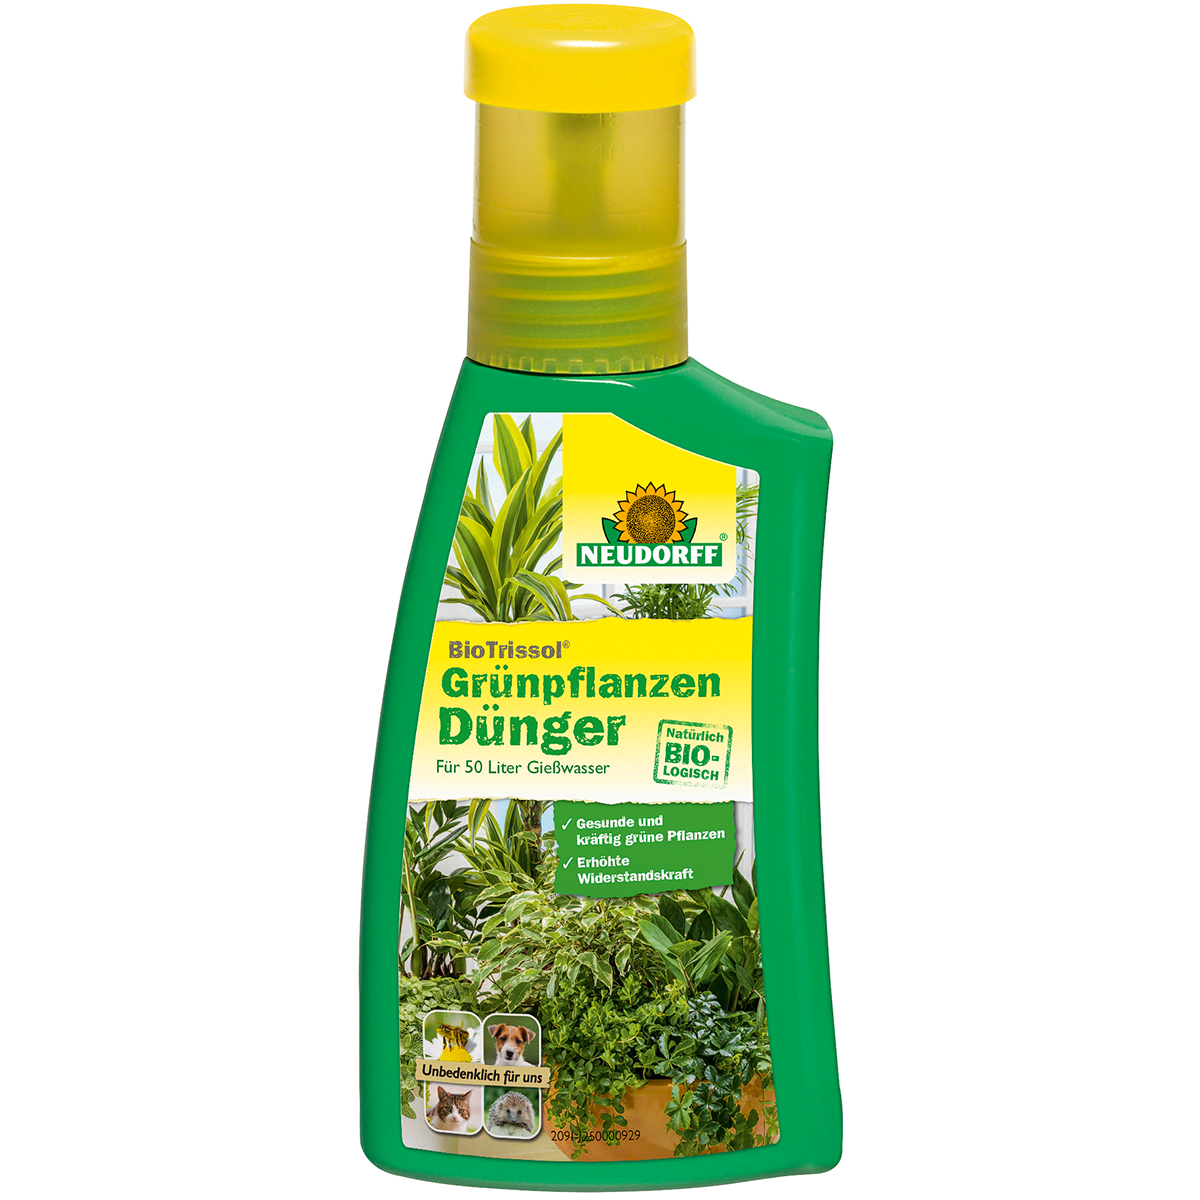 Neudorff BioTrissol GrünpflanzenDünger, 250 ml